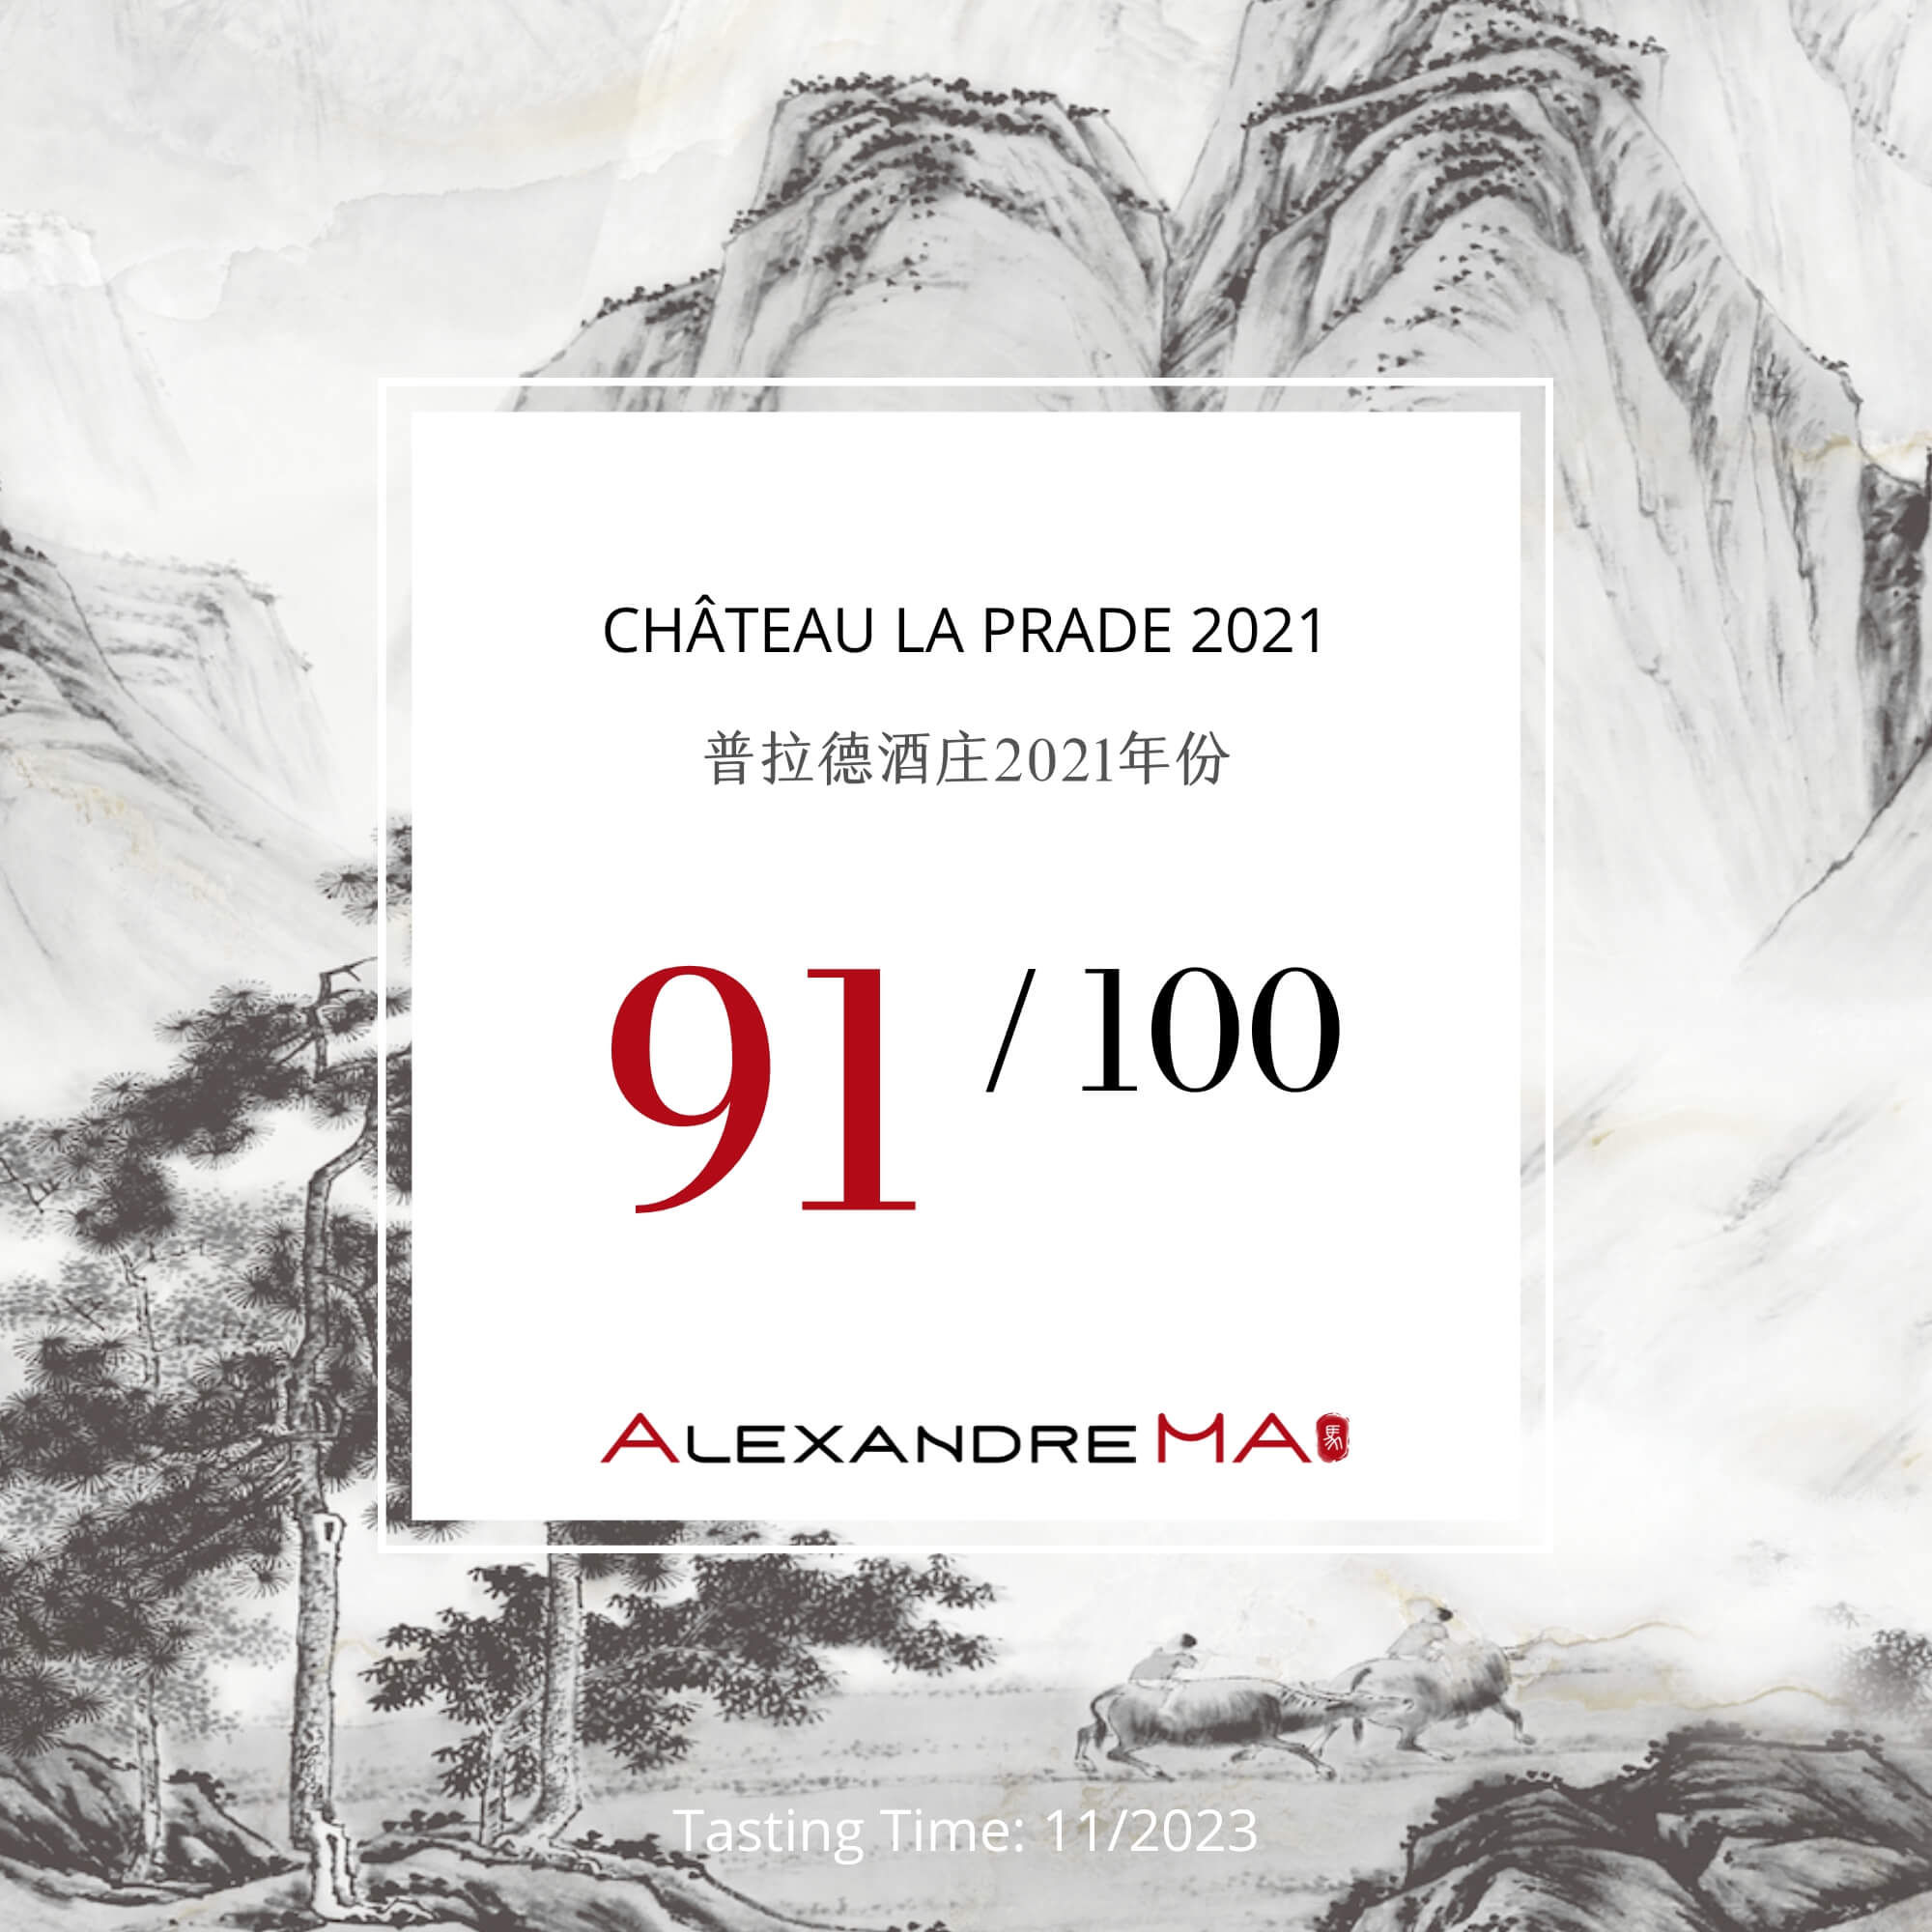 Château La Prade 2021 - Alexandre MA